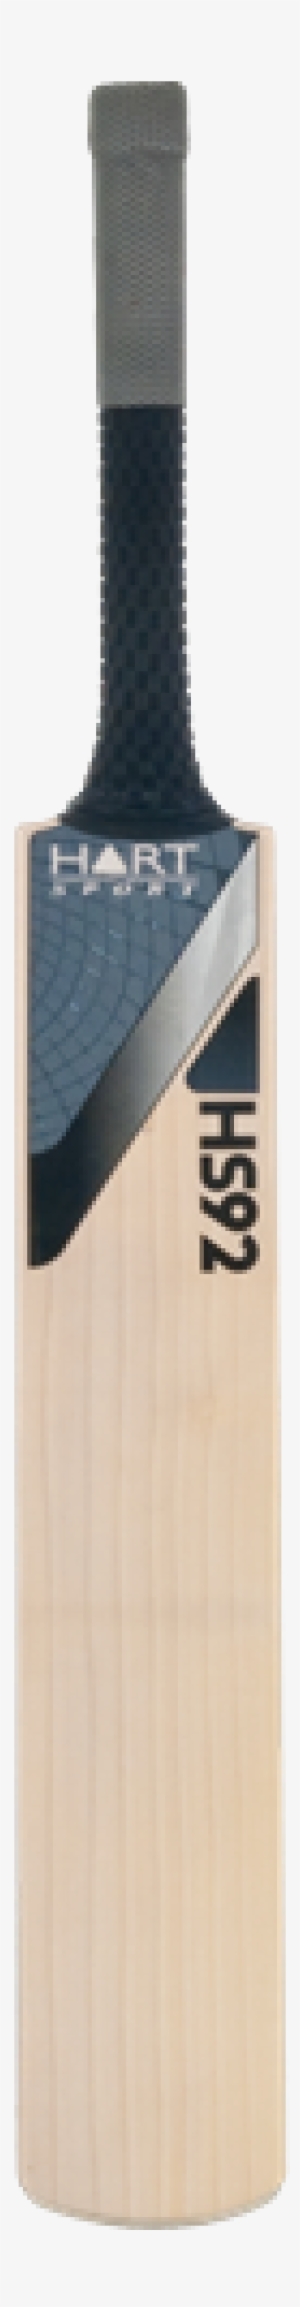 Hart Hs92 Cricket Bat